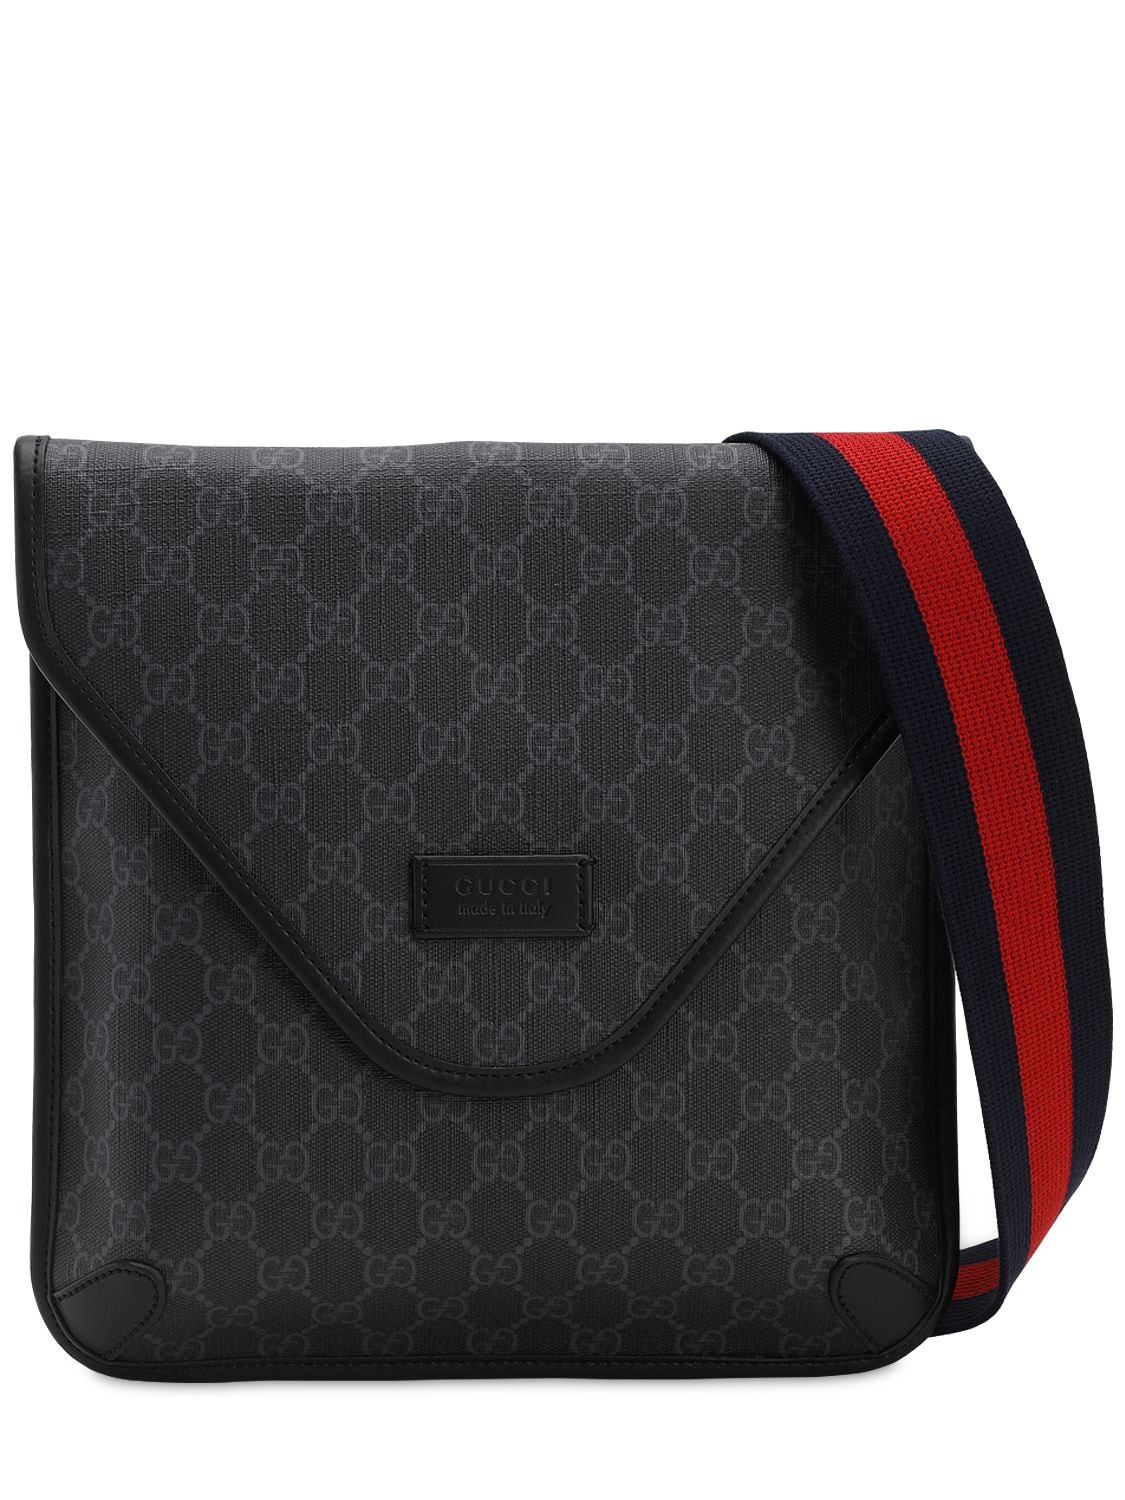 Gg Supreme Crossbody Bag | The Fashionisto